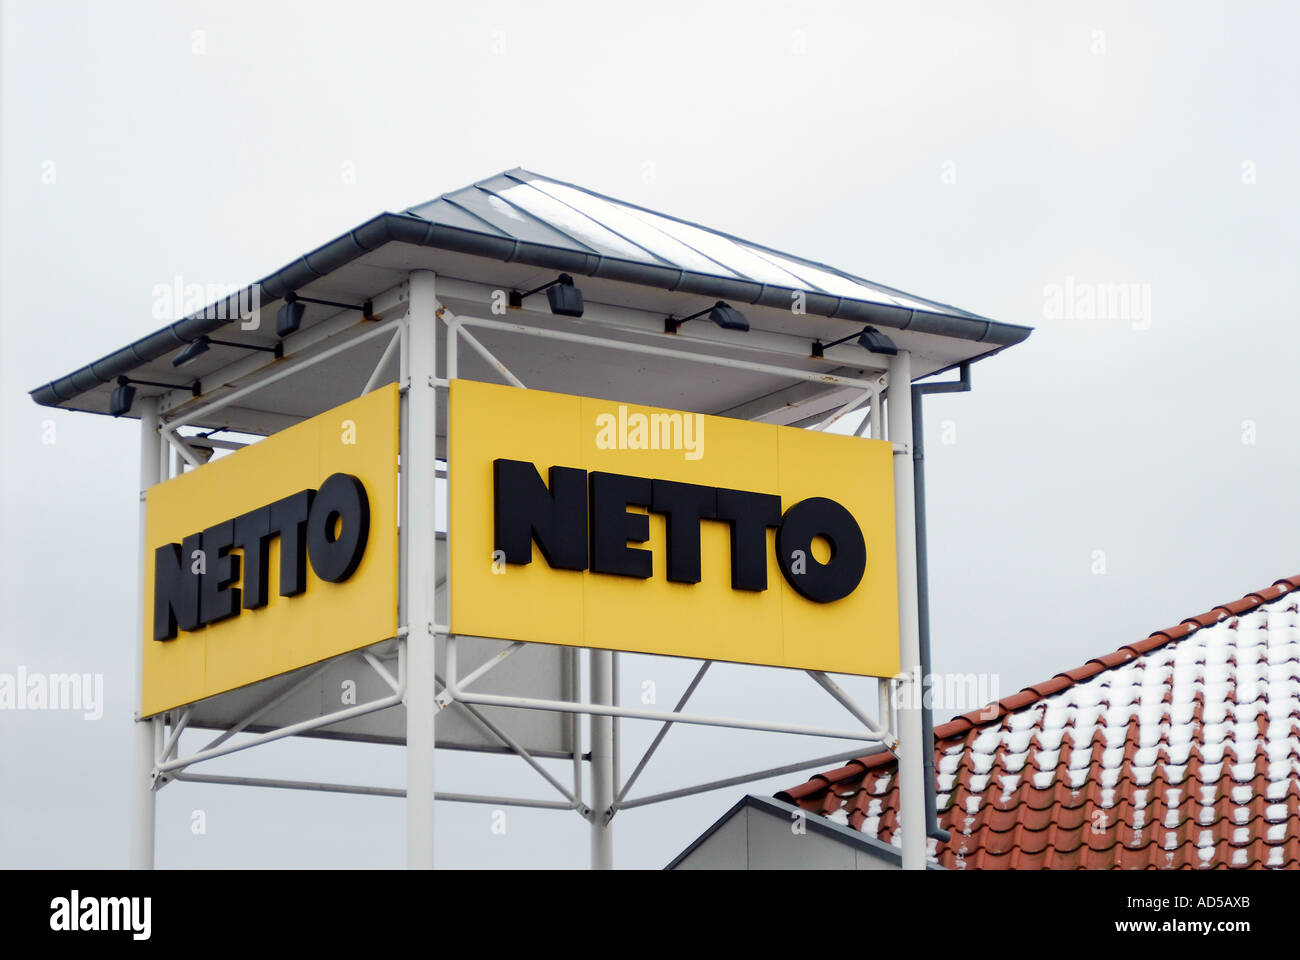 Netto supermarket chain, Denmark, Scandinavia Stock Photo - Alamy